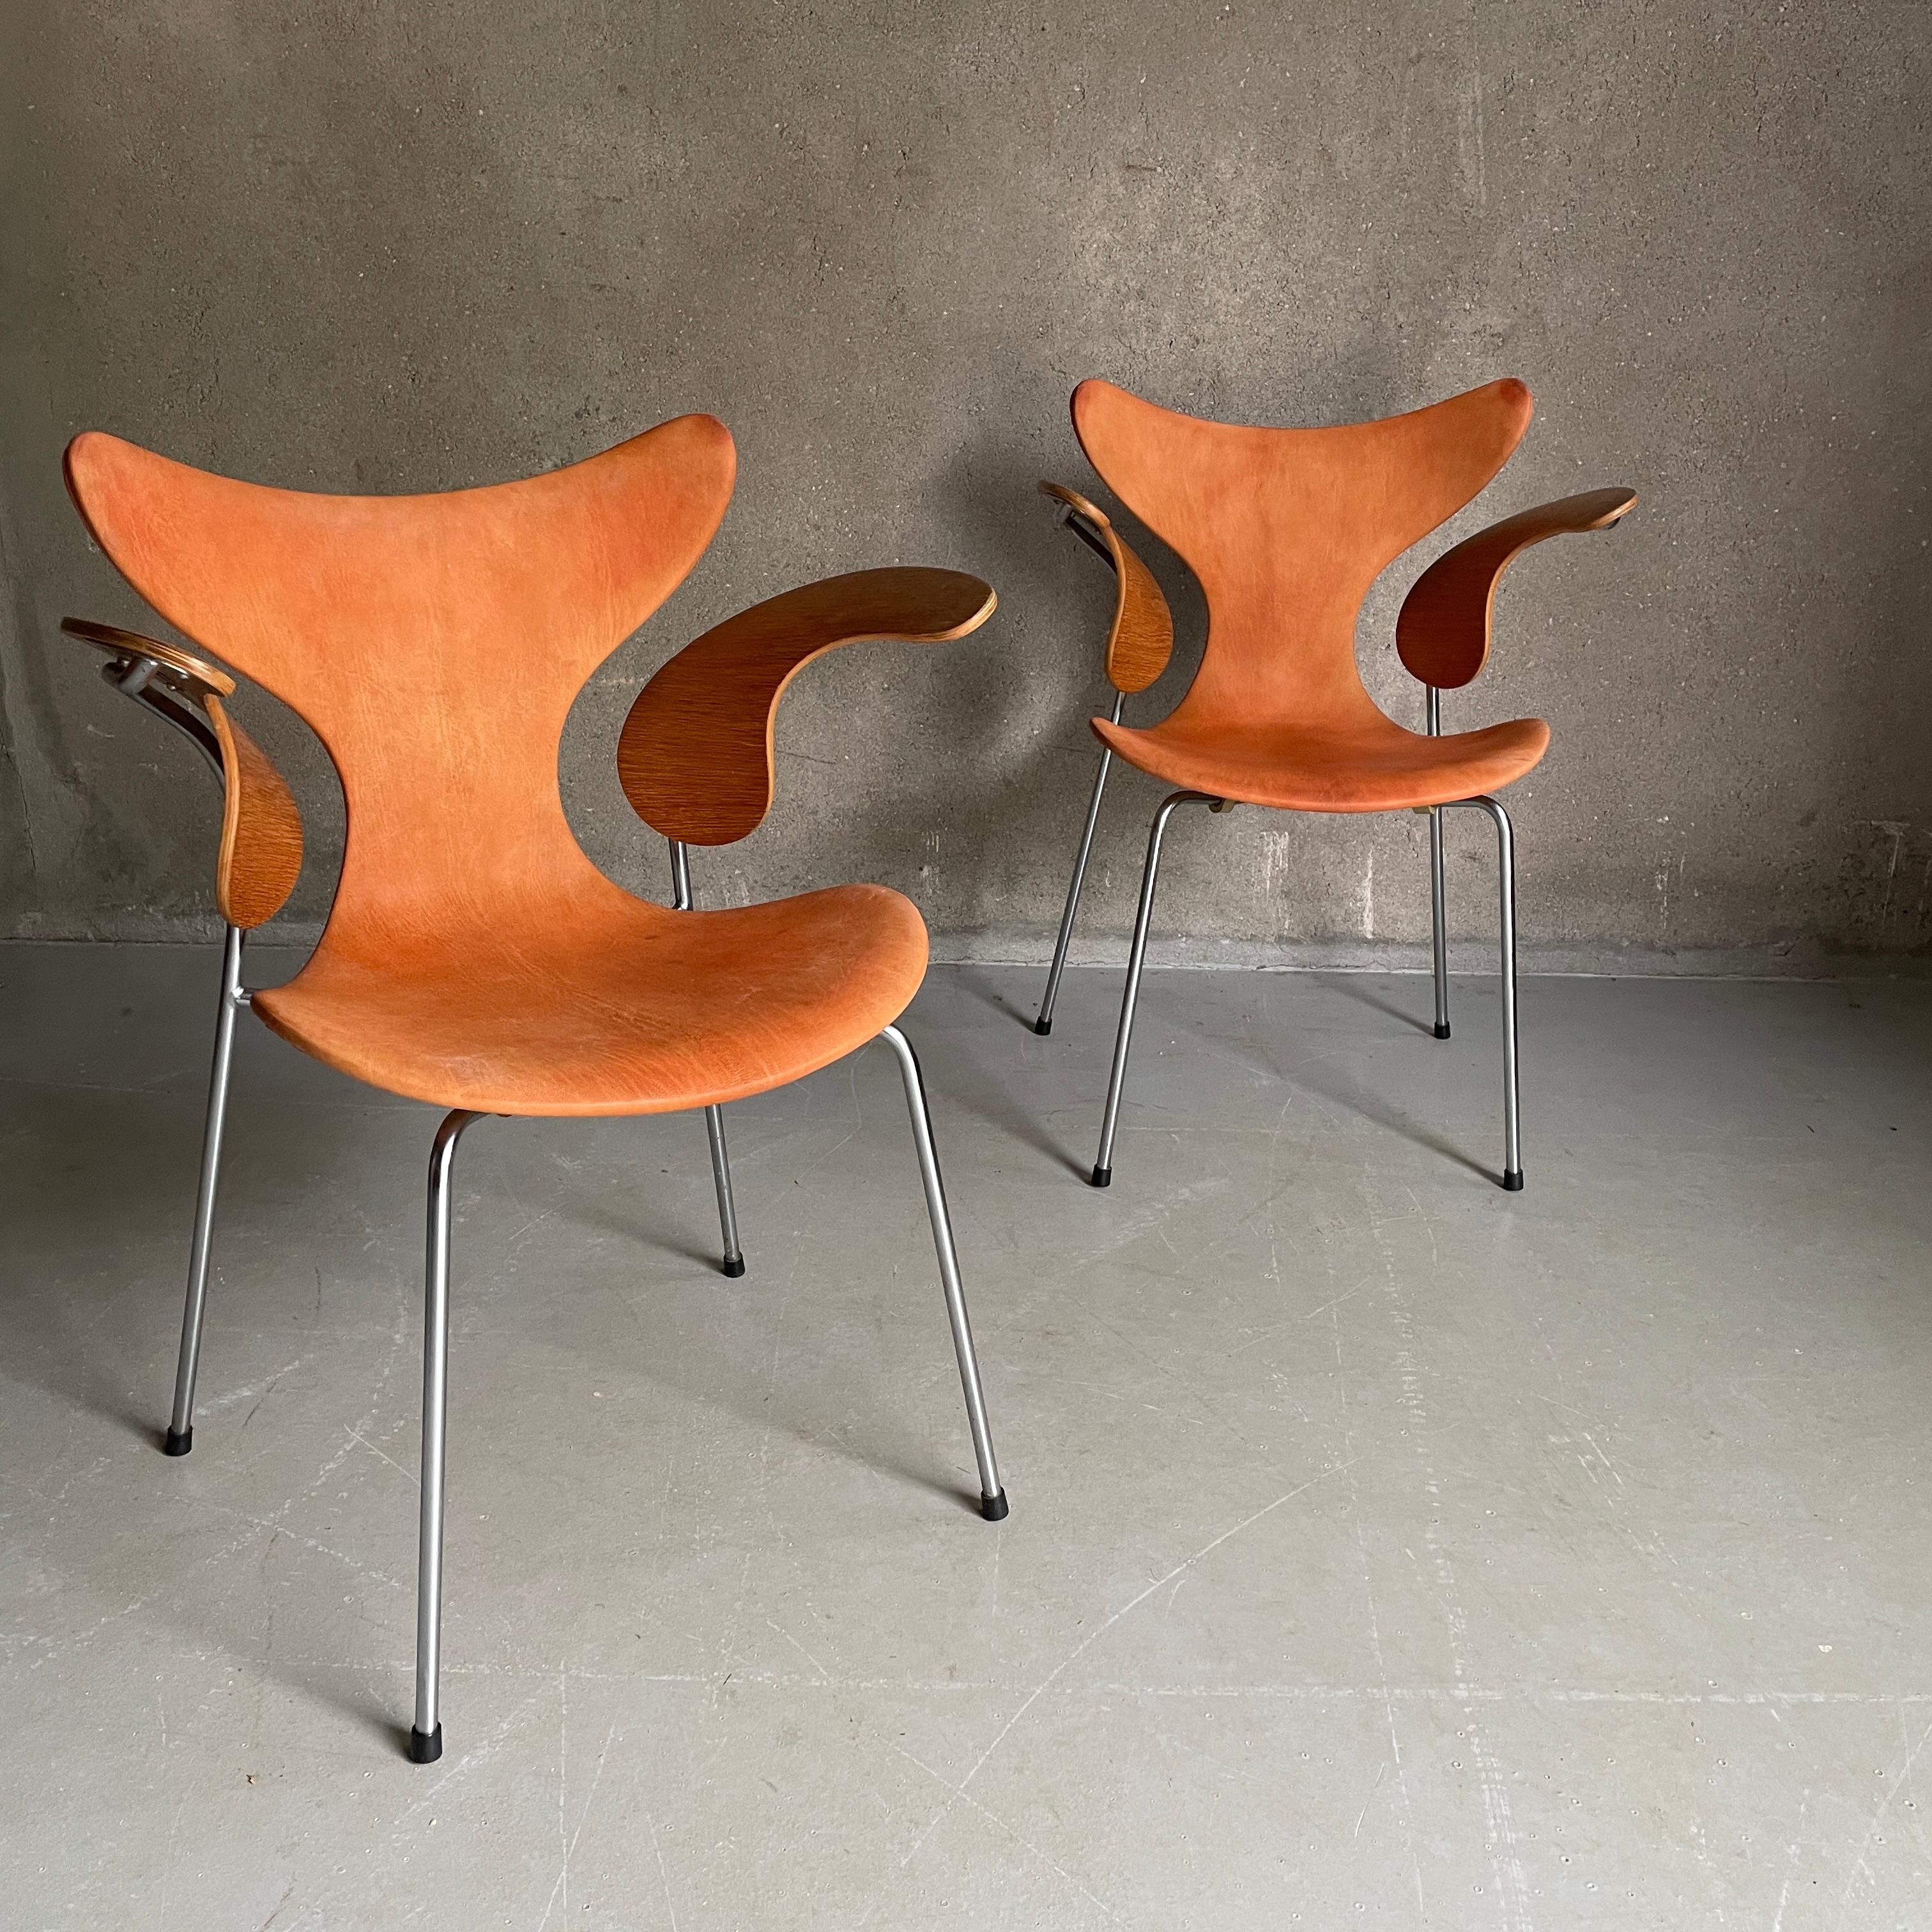 Arne Jacobsen. Pair of armchairs. Model 3208 (